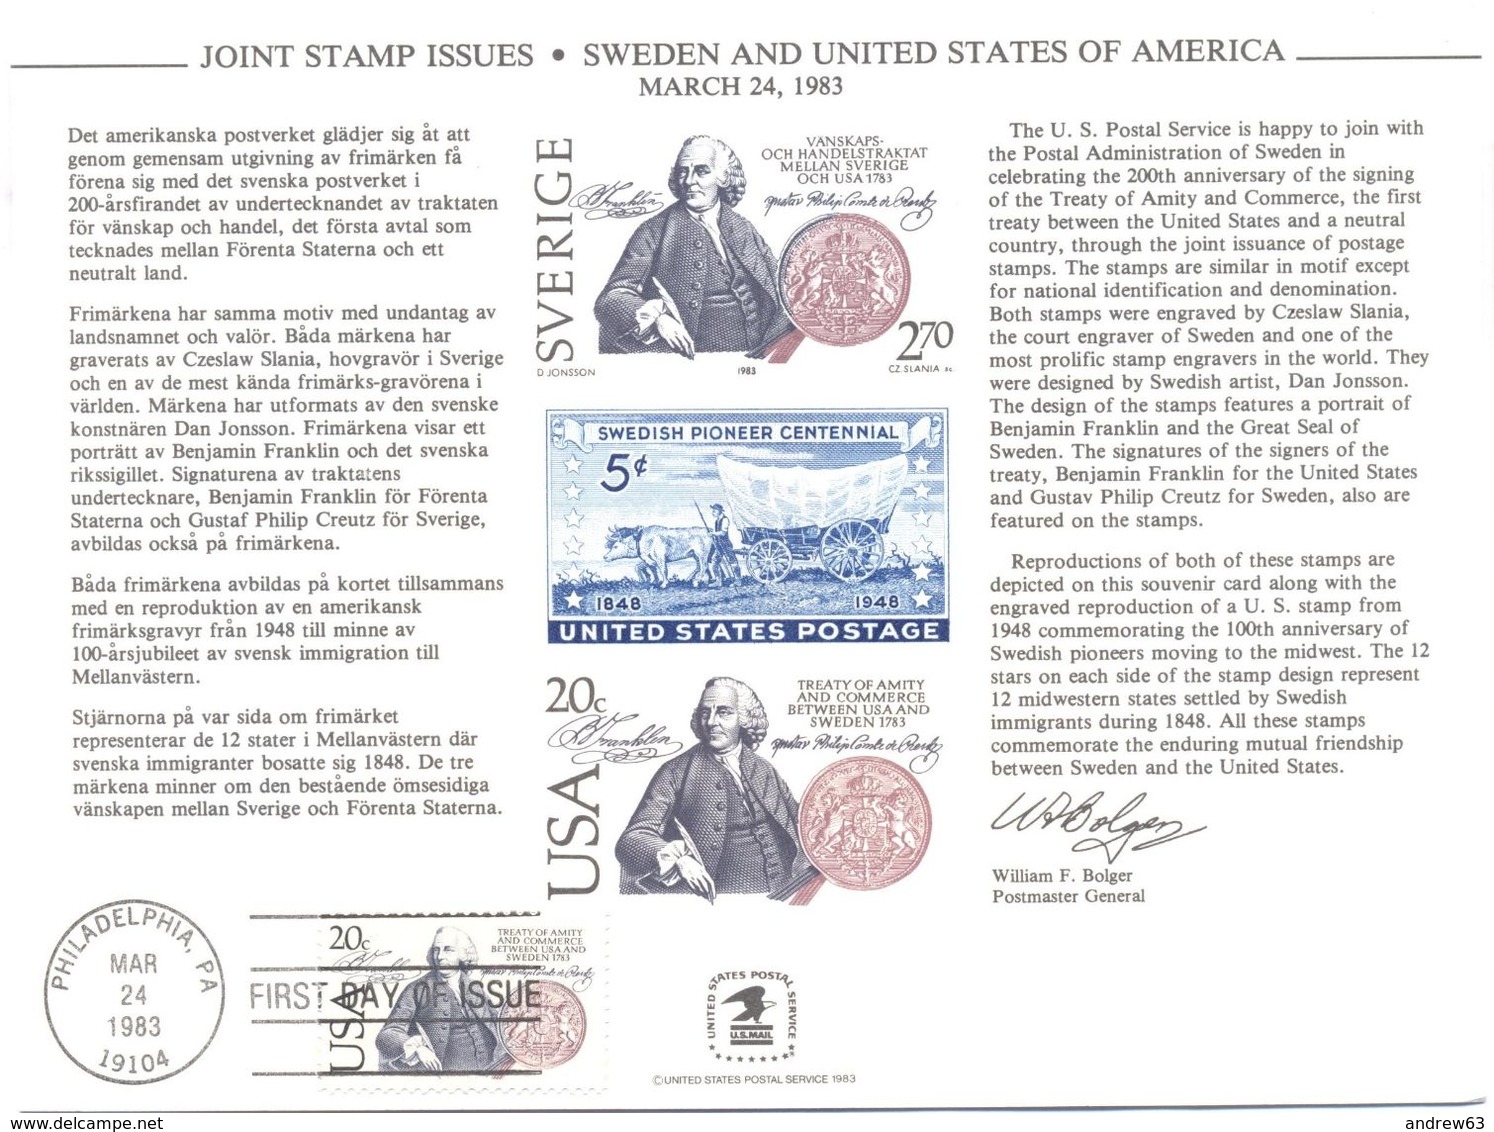 STATI UNITI - USA - 1983 - Cancelled Mint Souvenir Card - Joint Stamp Issues - USA-SWEDEN 200th Ann. Of Treaty - FDC - Souvenirkaarten